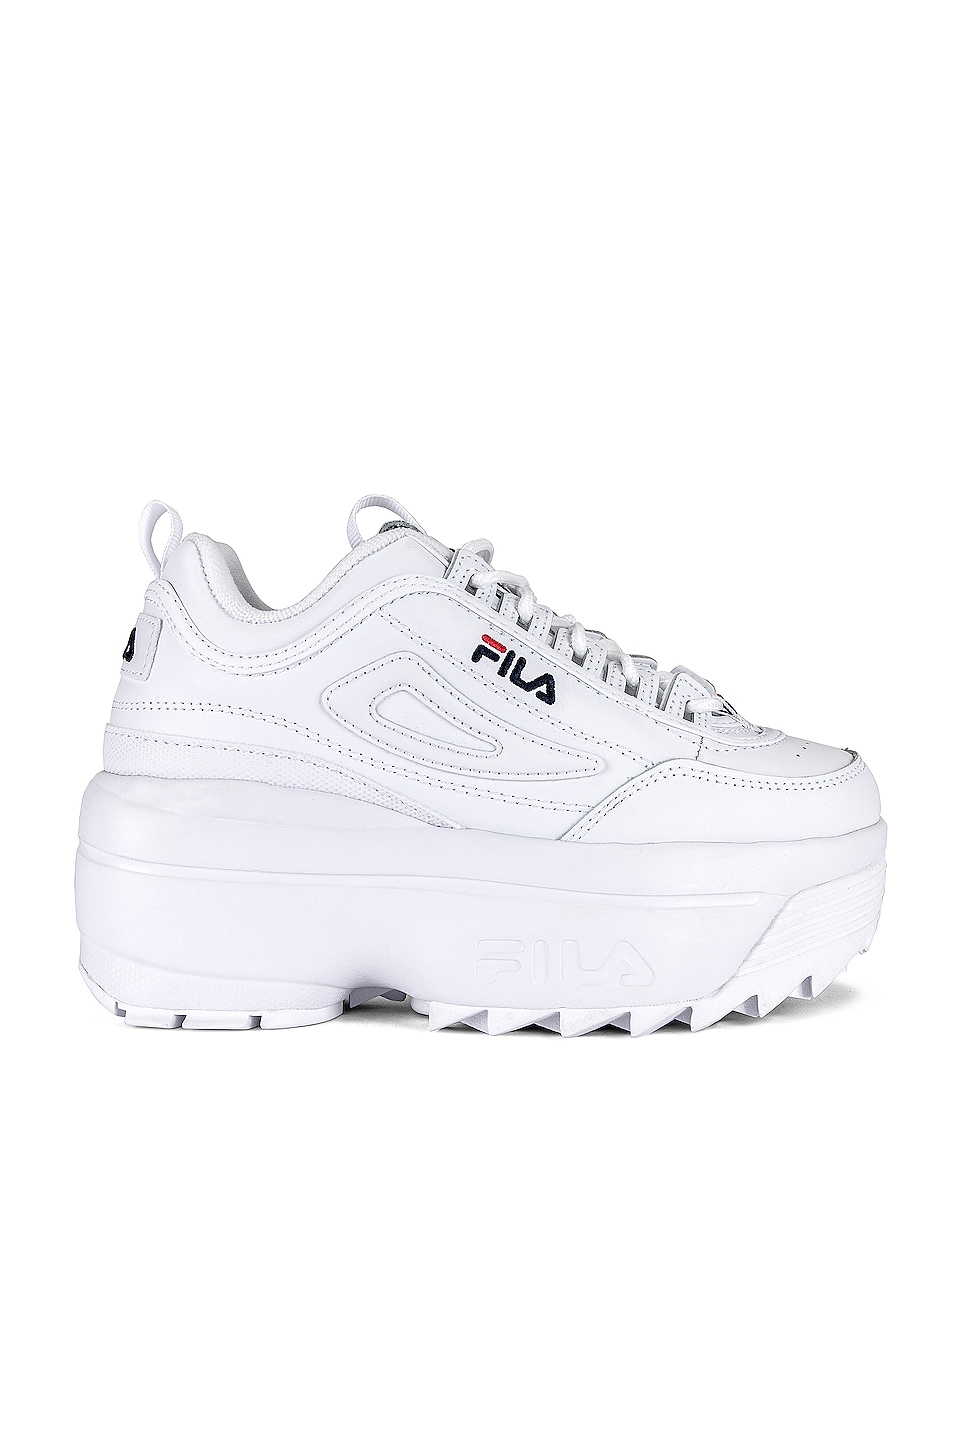 Daughter Ban convergence Fila Disruptor II Sneaker in White, Fila Navy, & Fila Red | REVOLVE